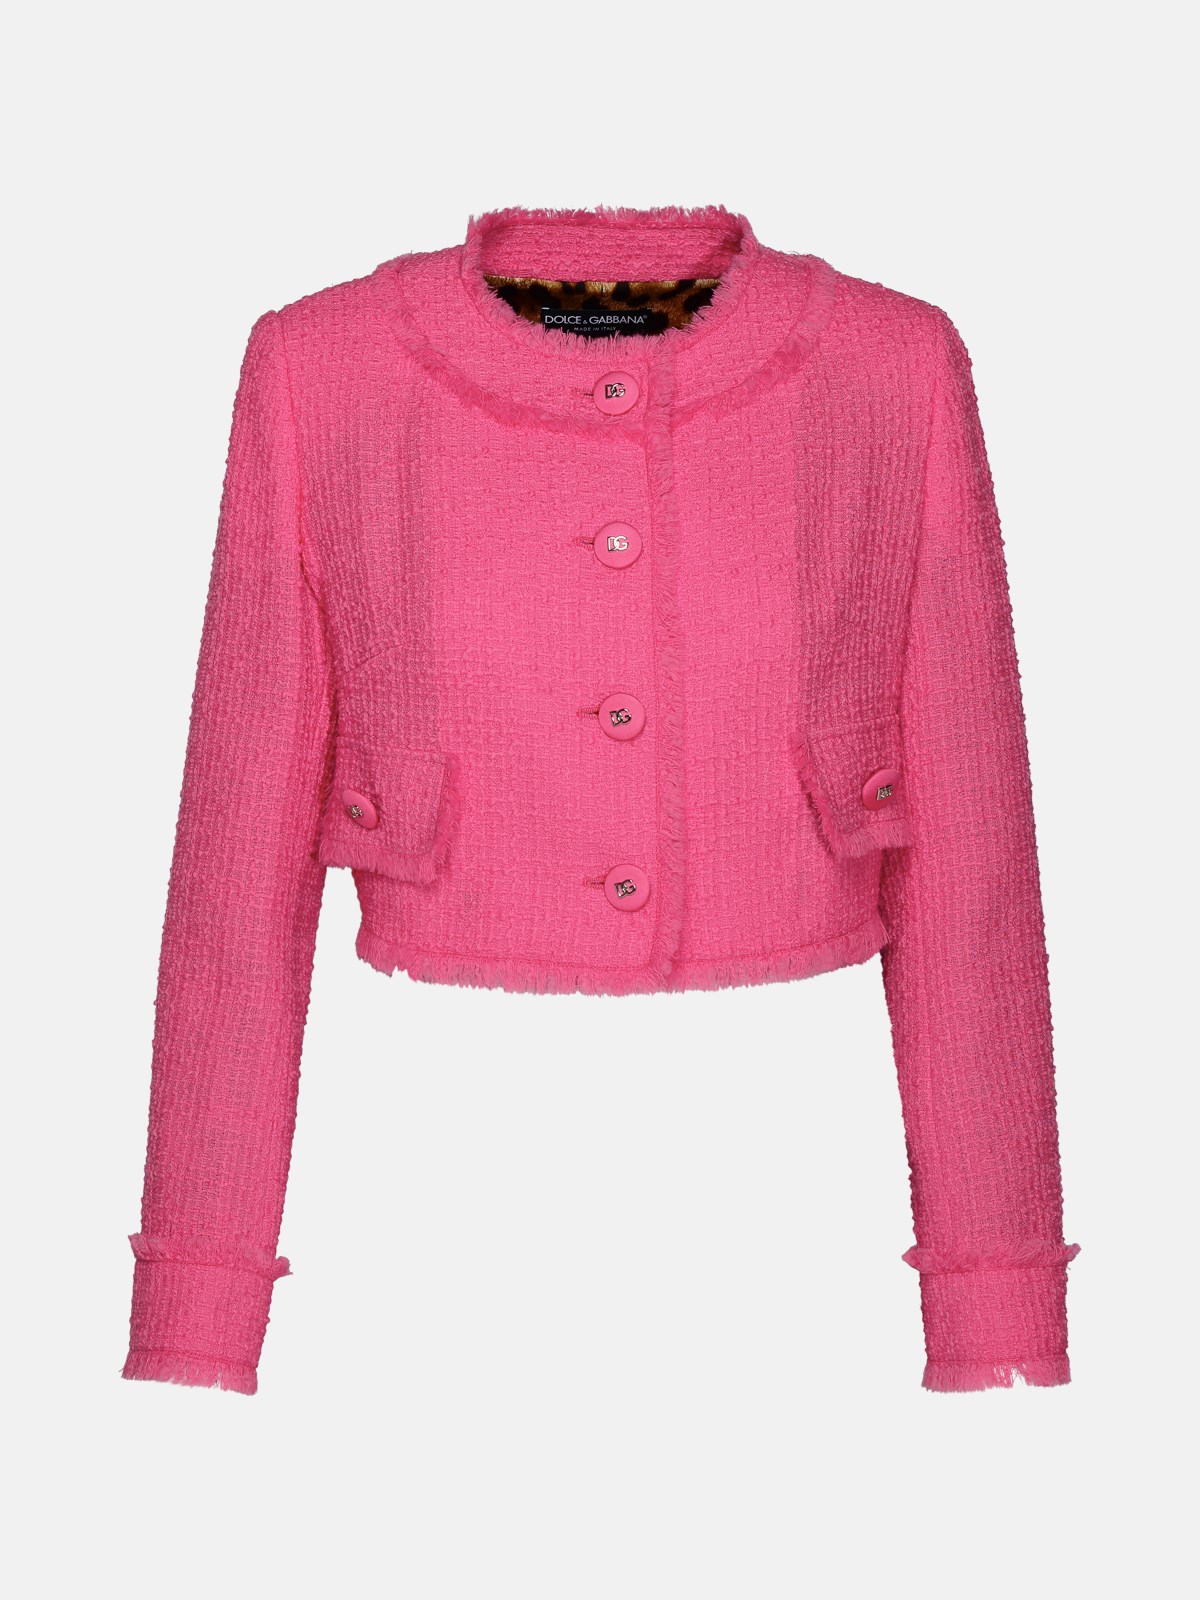 Dolce & Gabbana Pink Wool Jacket